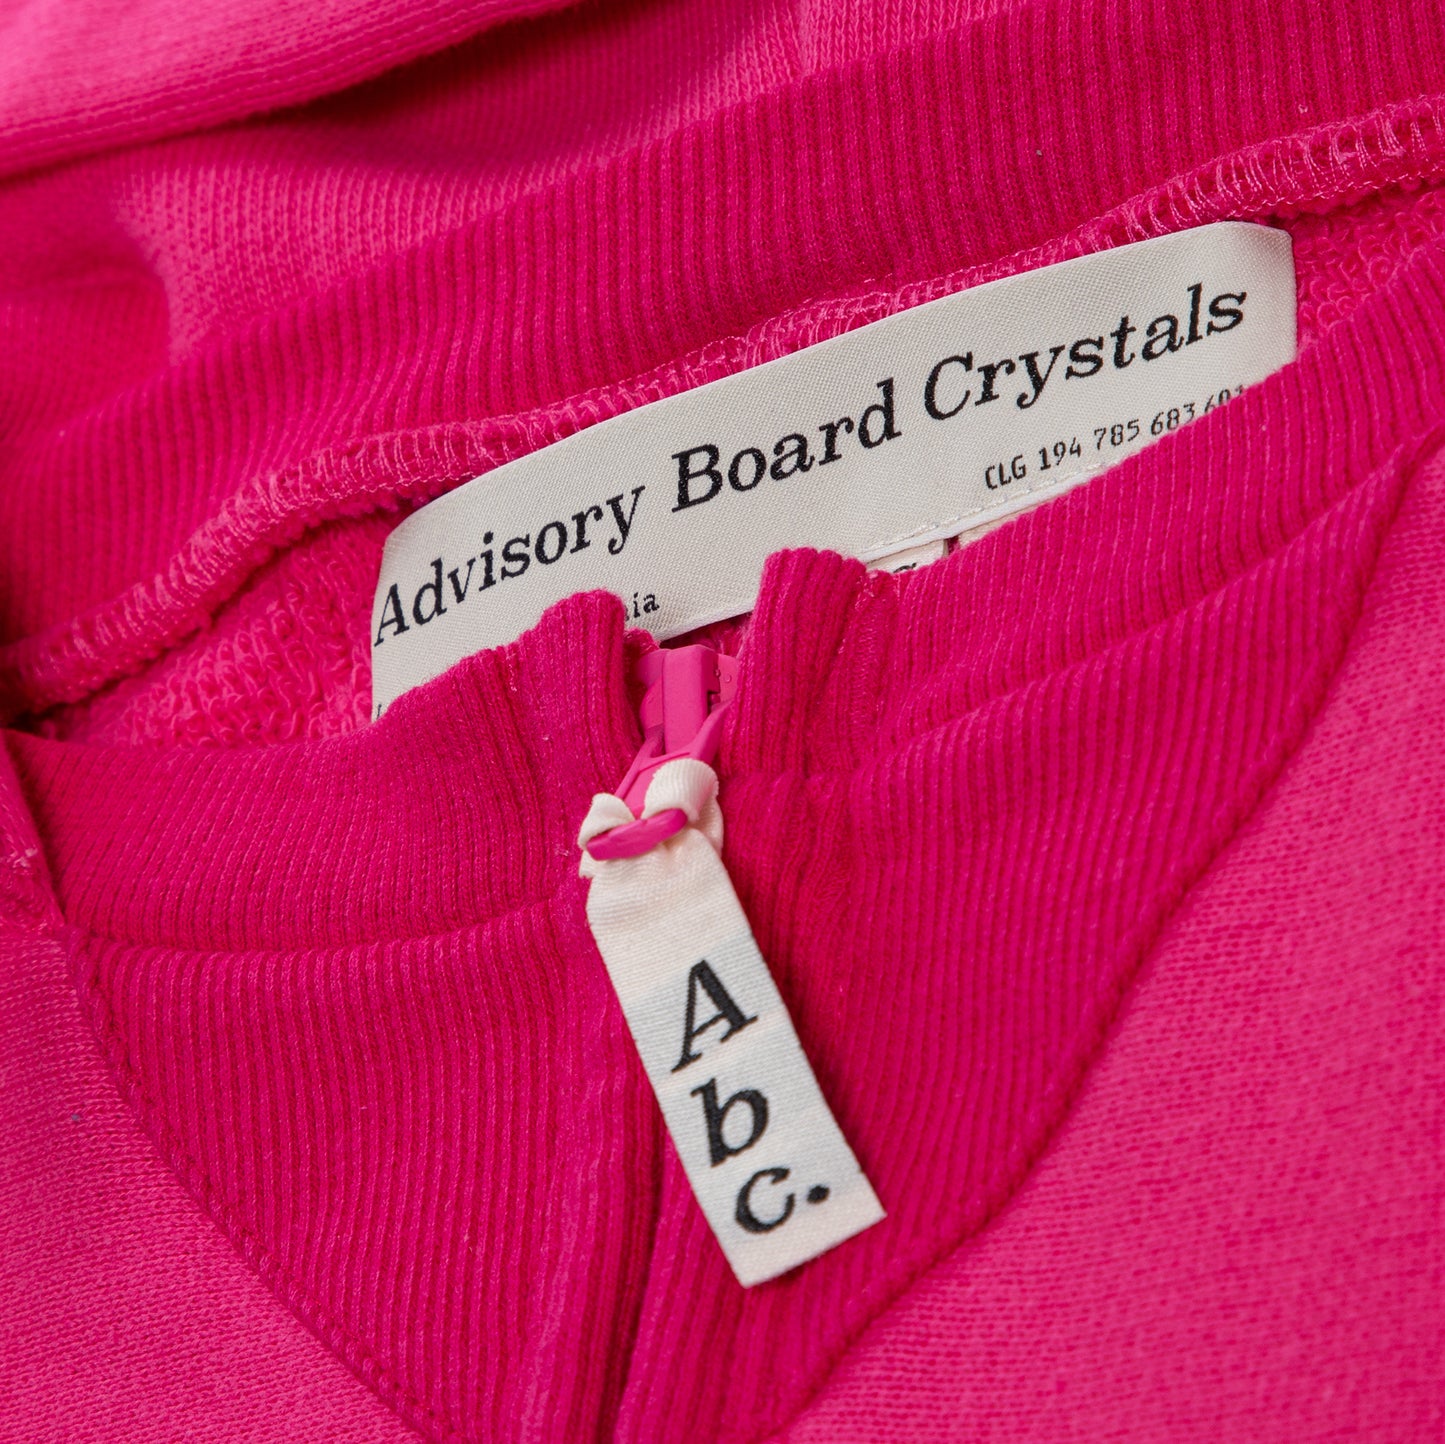 Advisory Board Crystals Abc. 123. Tri-Tone Zip UP Hoodie (Pink)